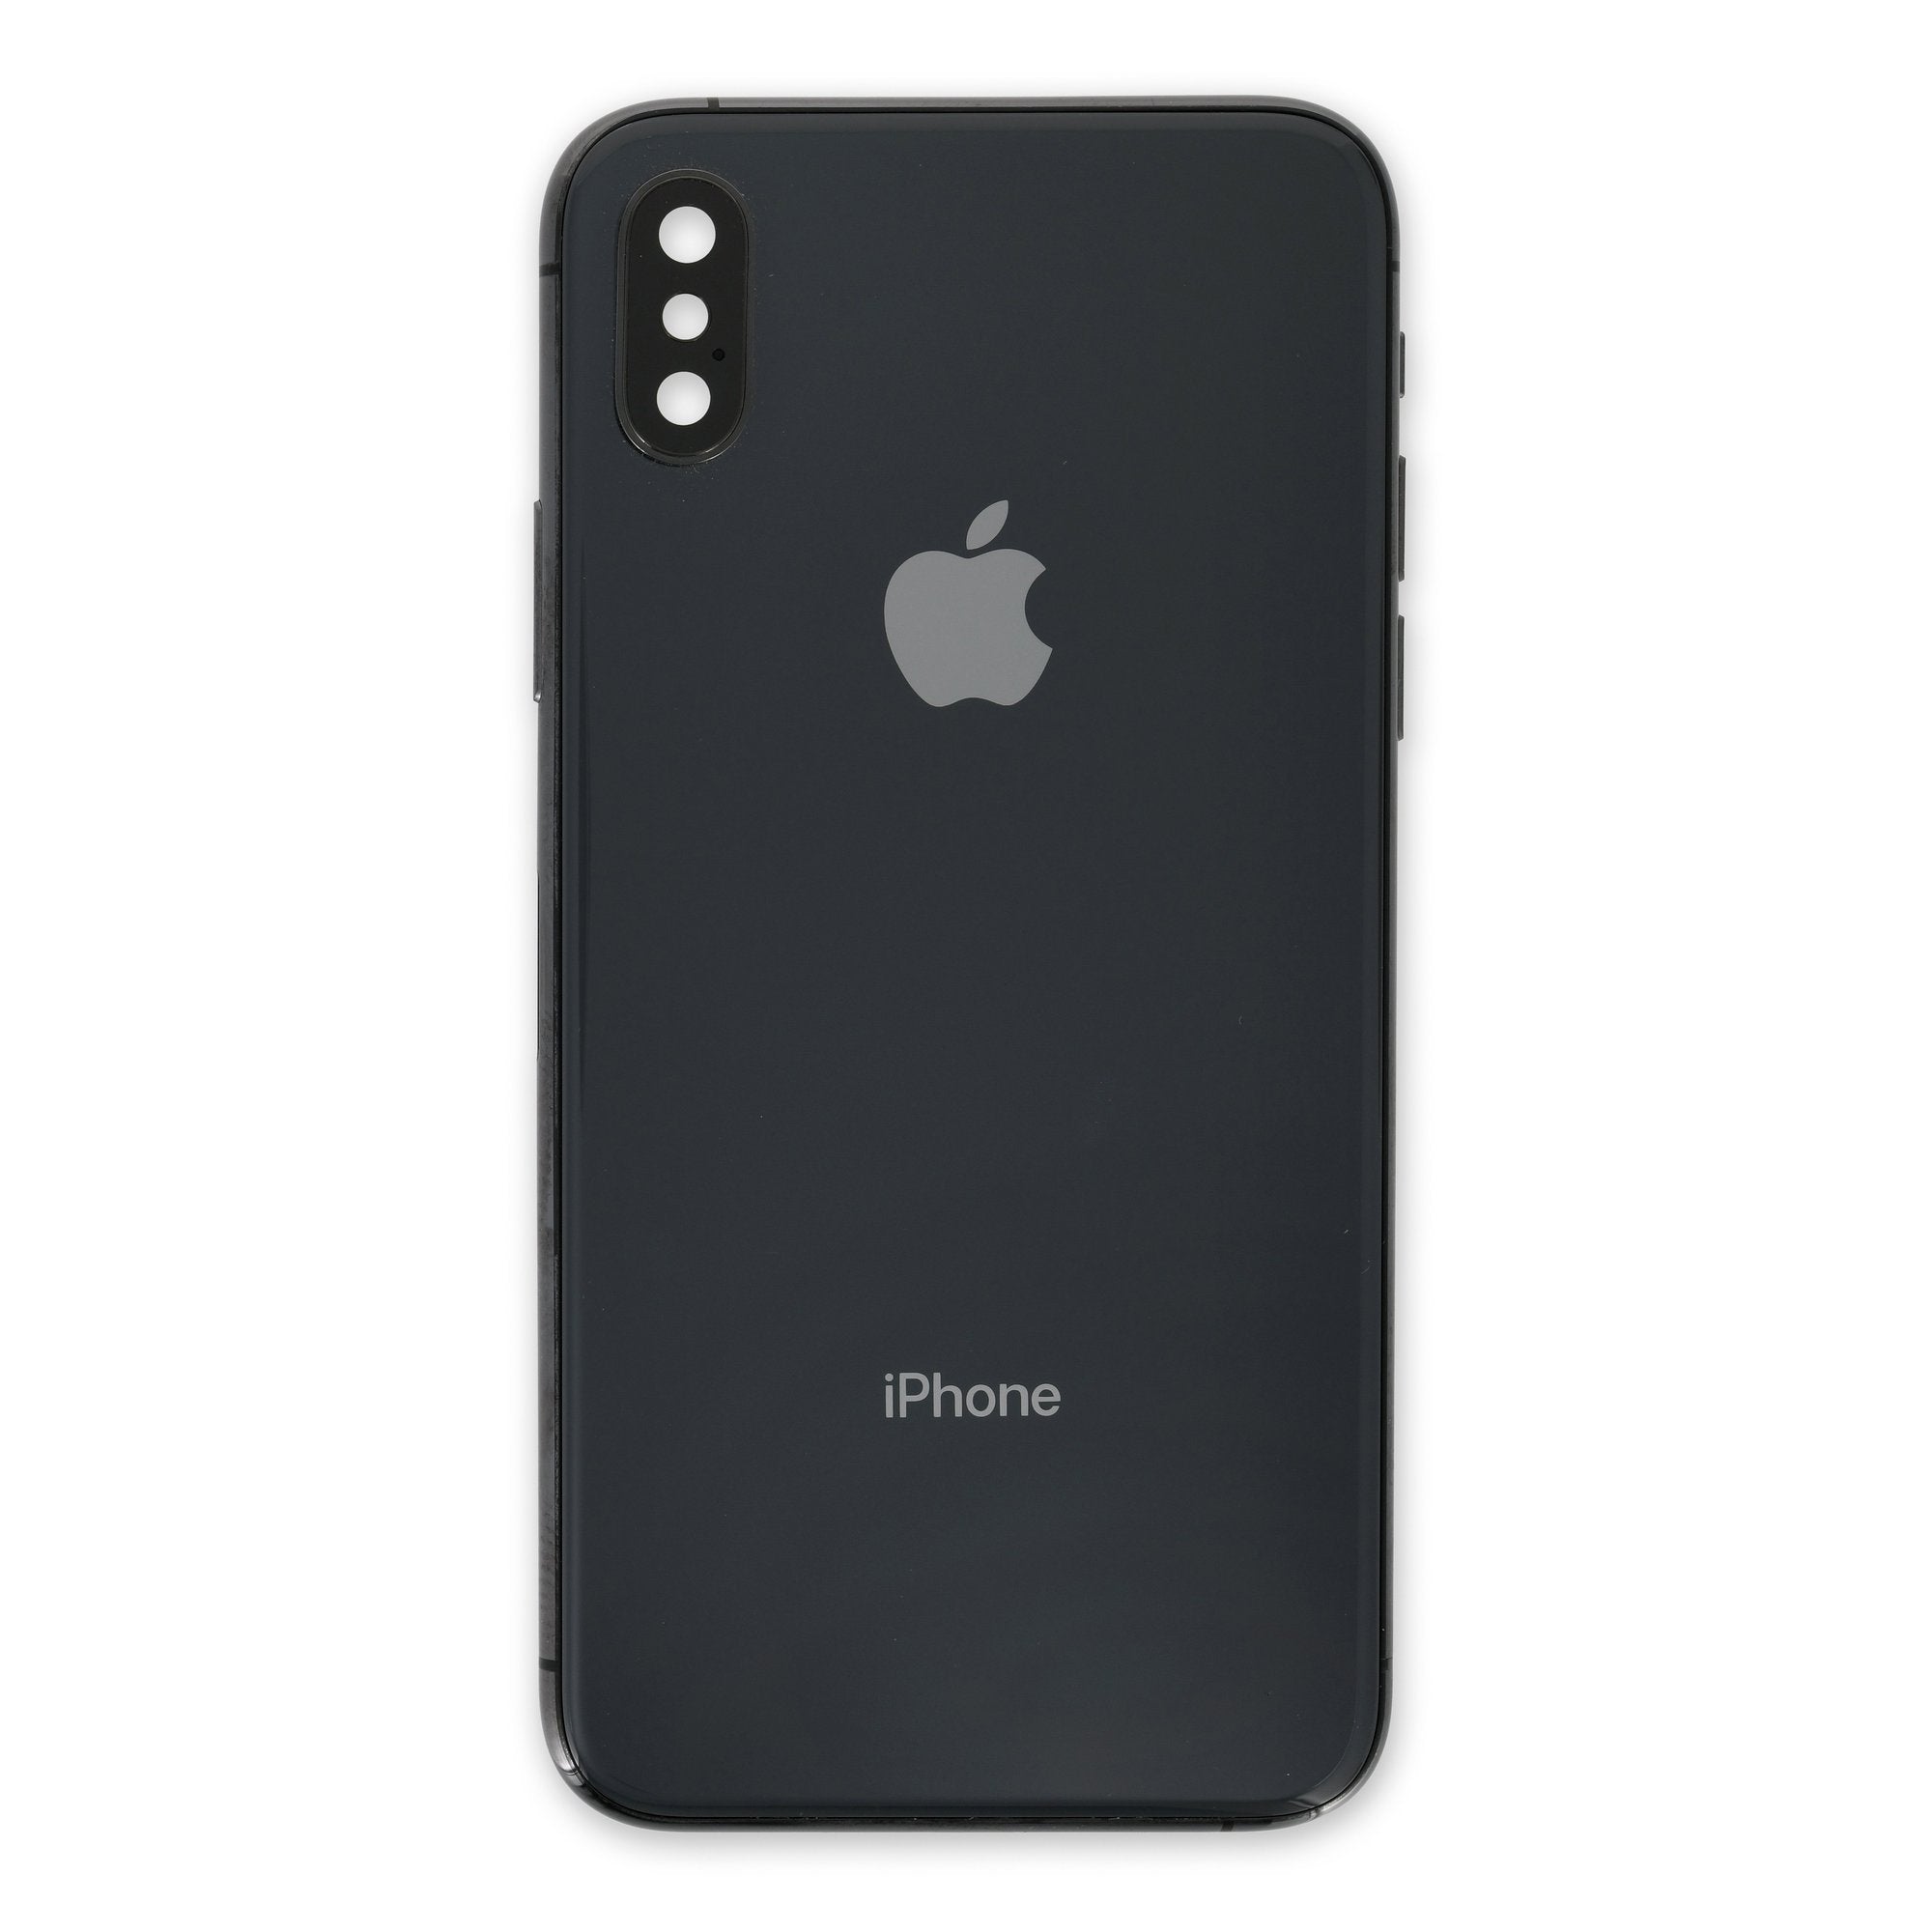 iPhone X OEM Rear Case